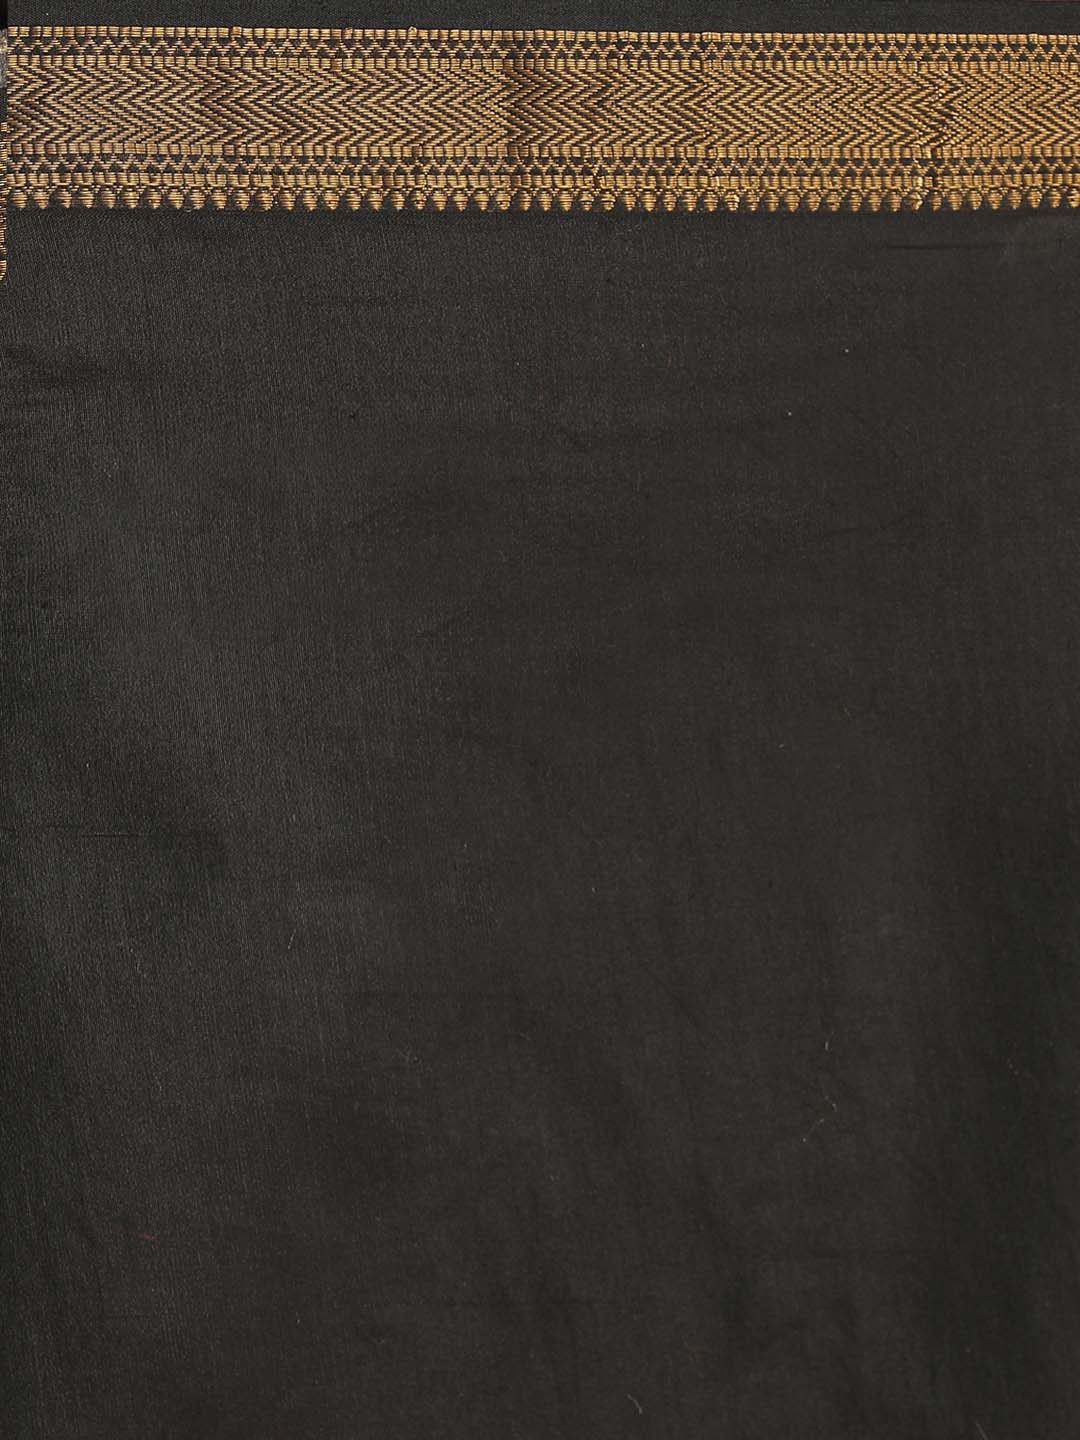 Indethnic Banarasi Black Solid Work Wear Saree - Saree Detail View